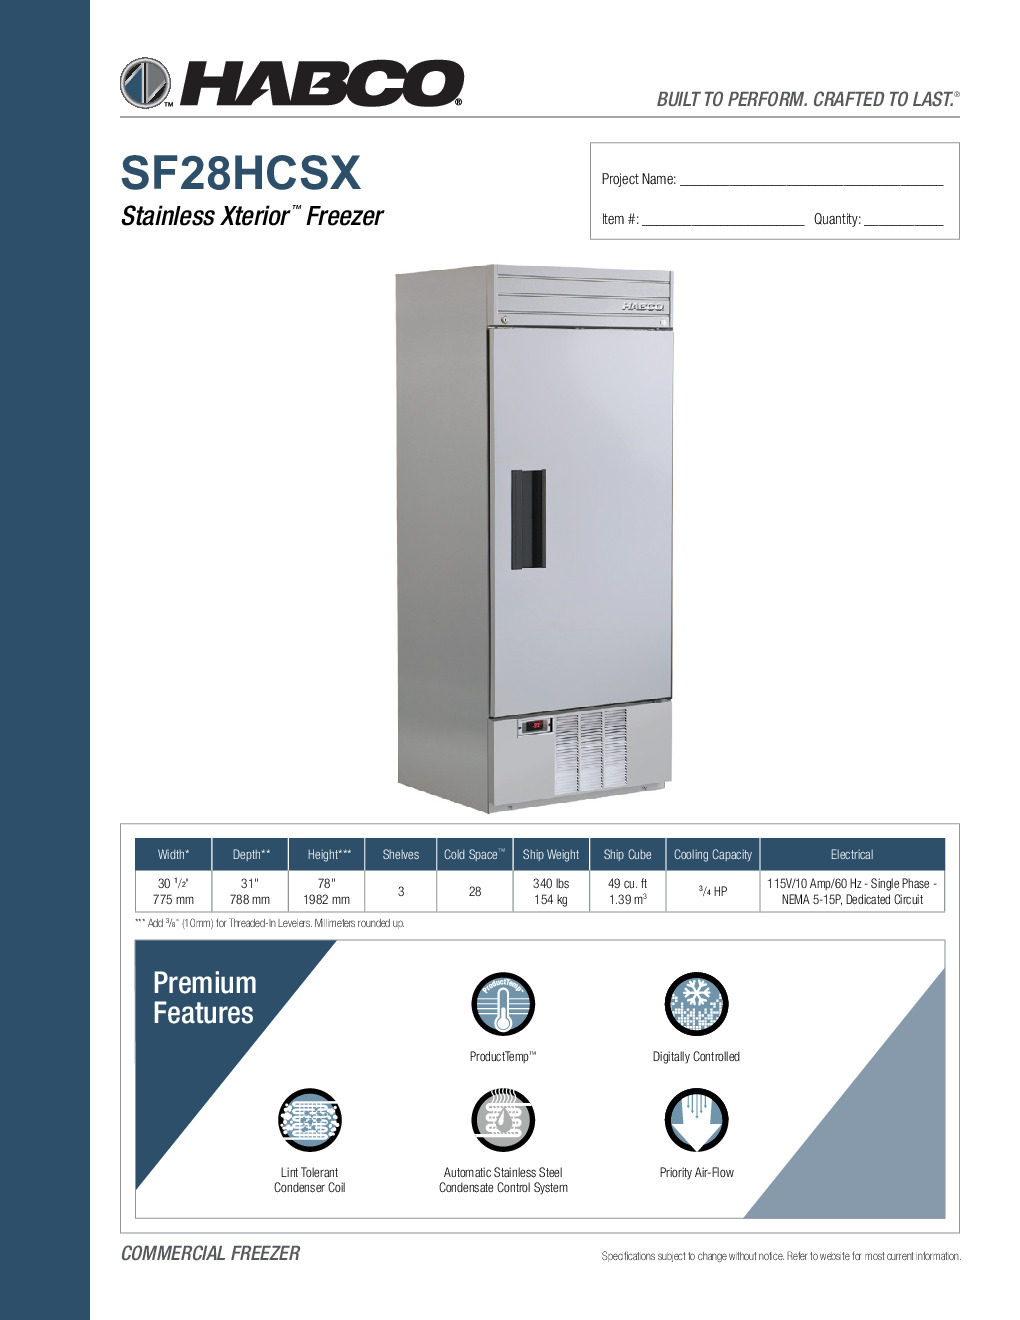 HABCO SF28HCSX Reach-In Freezer